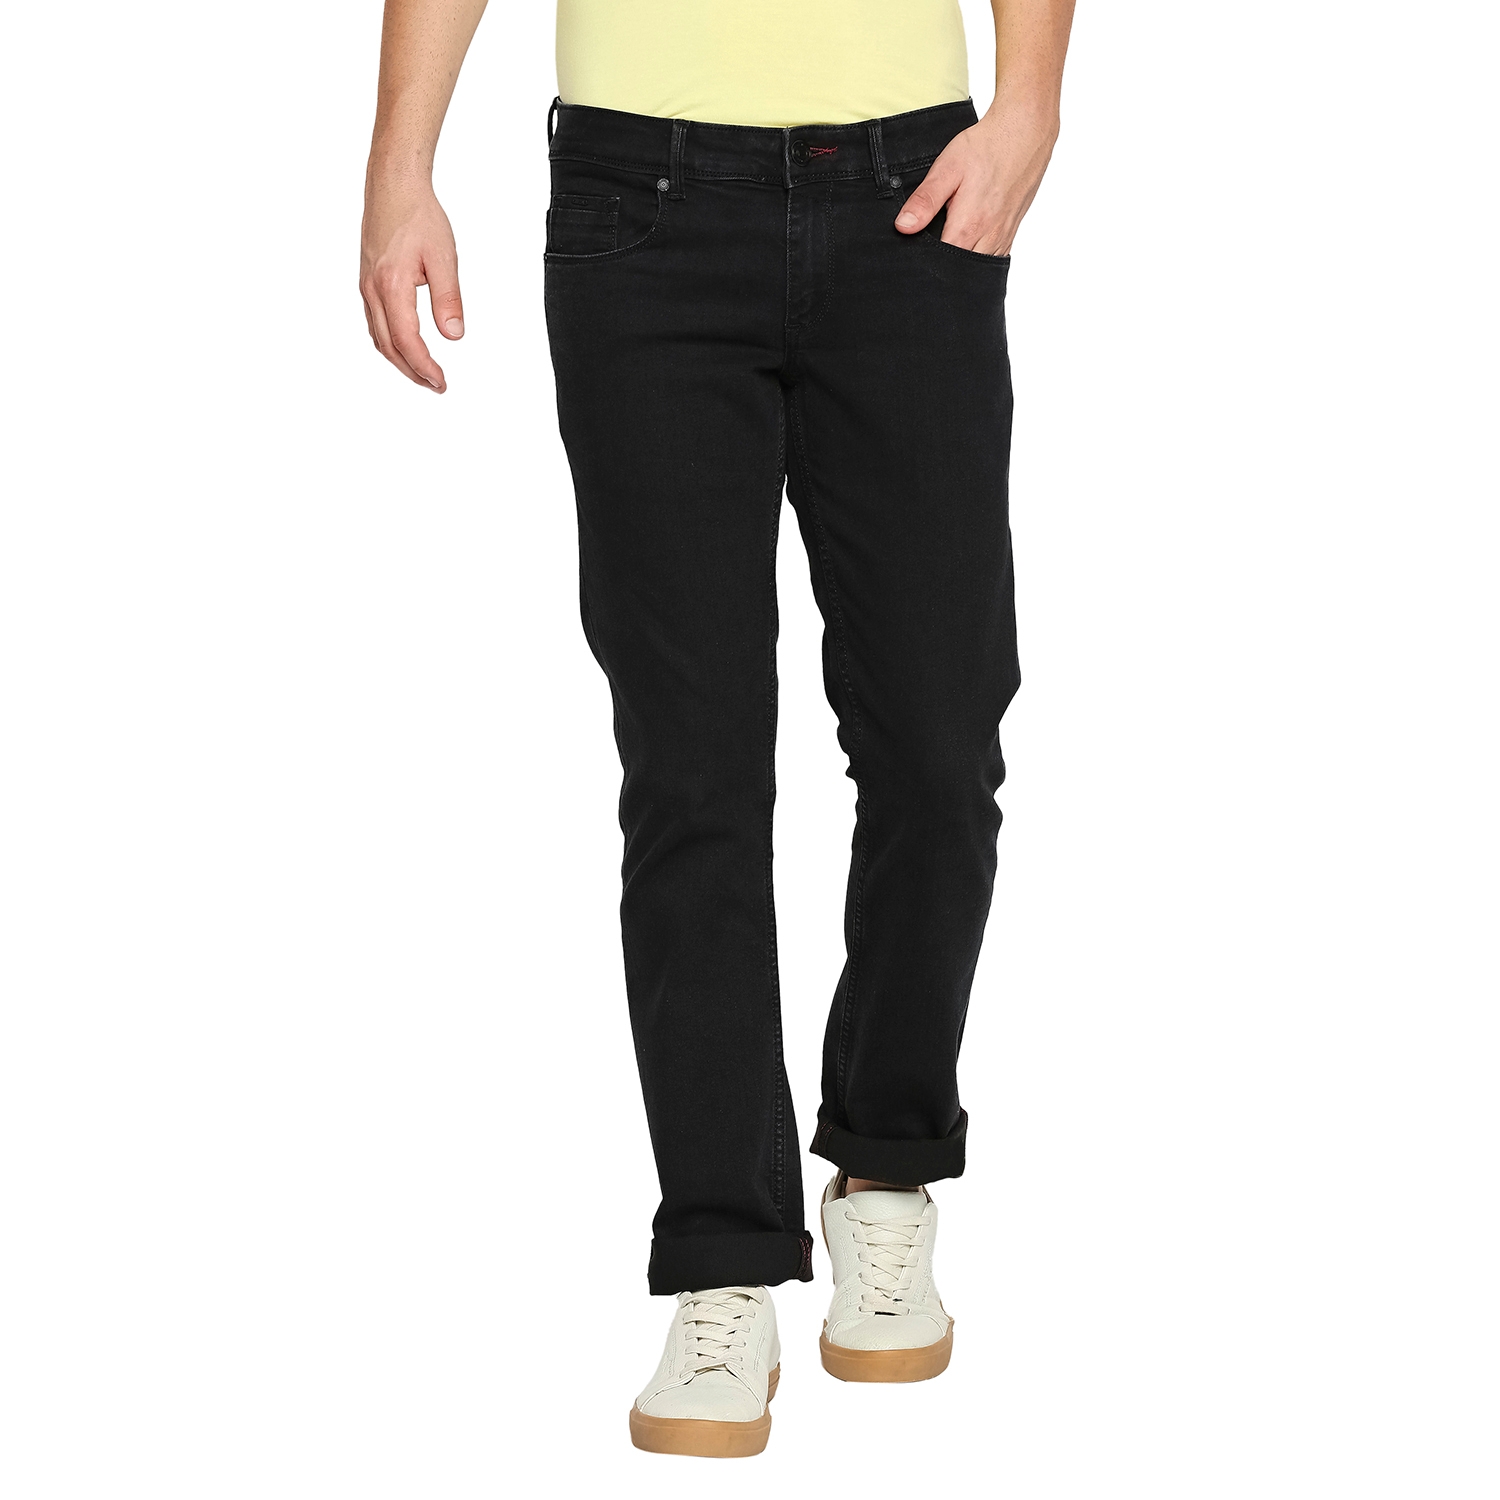 Basics | Men's Black Cotton Blend Solid Jeans 0